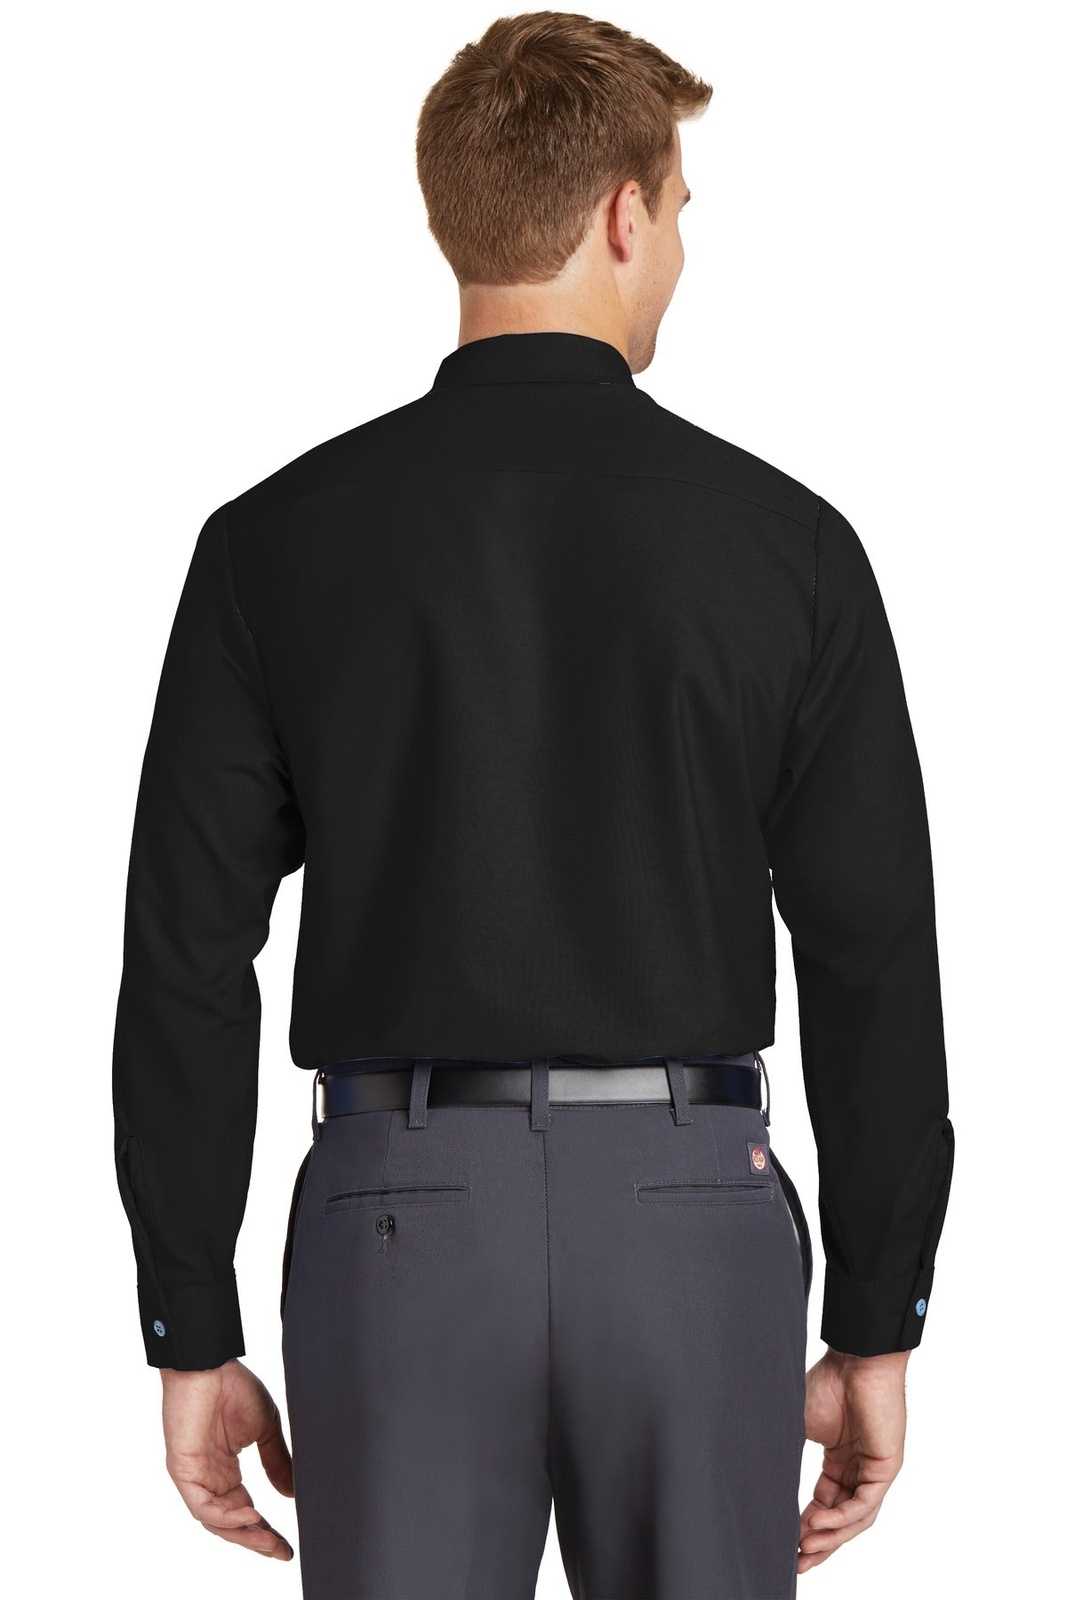 Red Kap SP14 Long Sleeve Industrial Work Shirt - Black - HIT a Double - 1